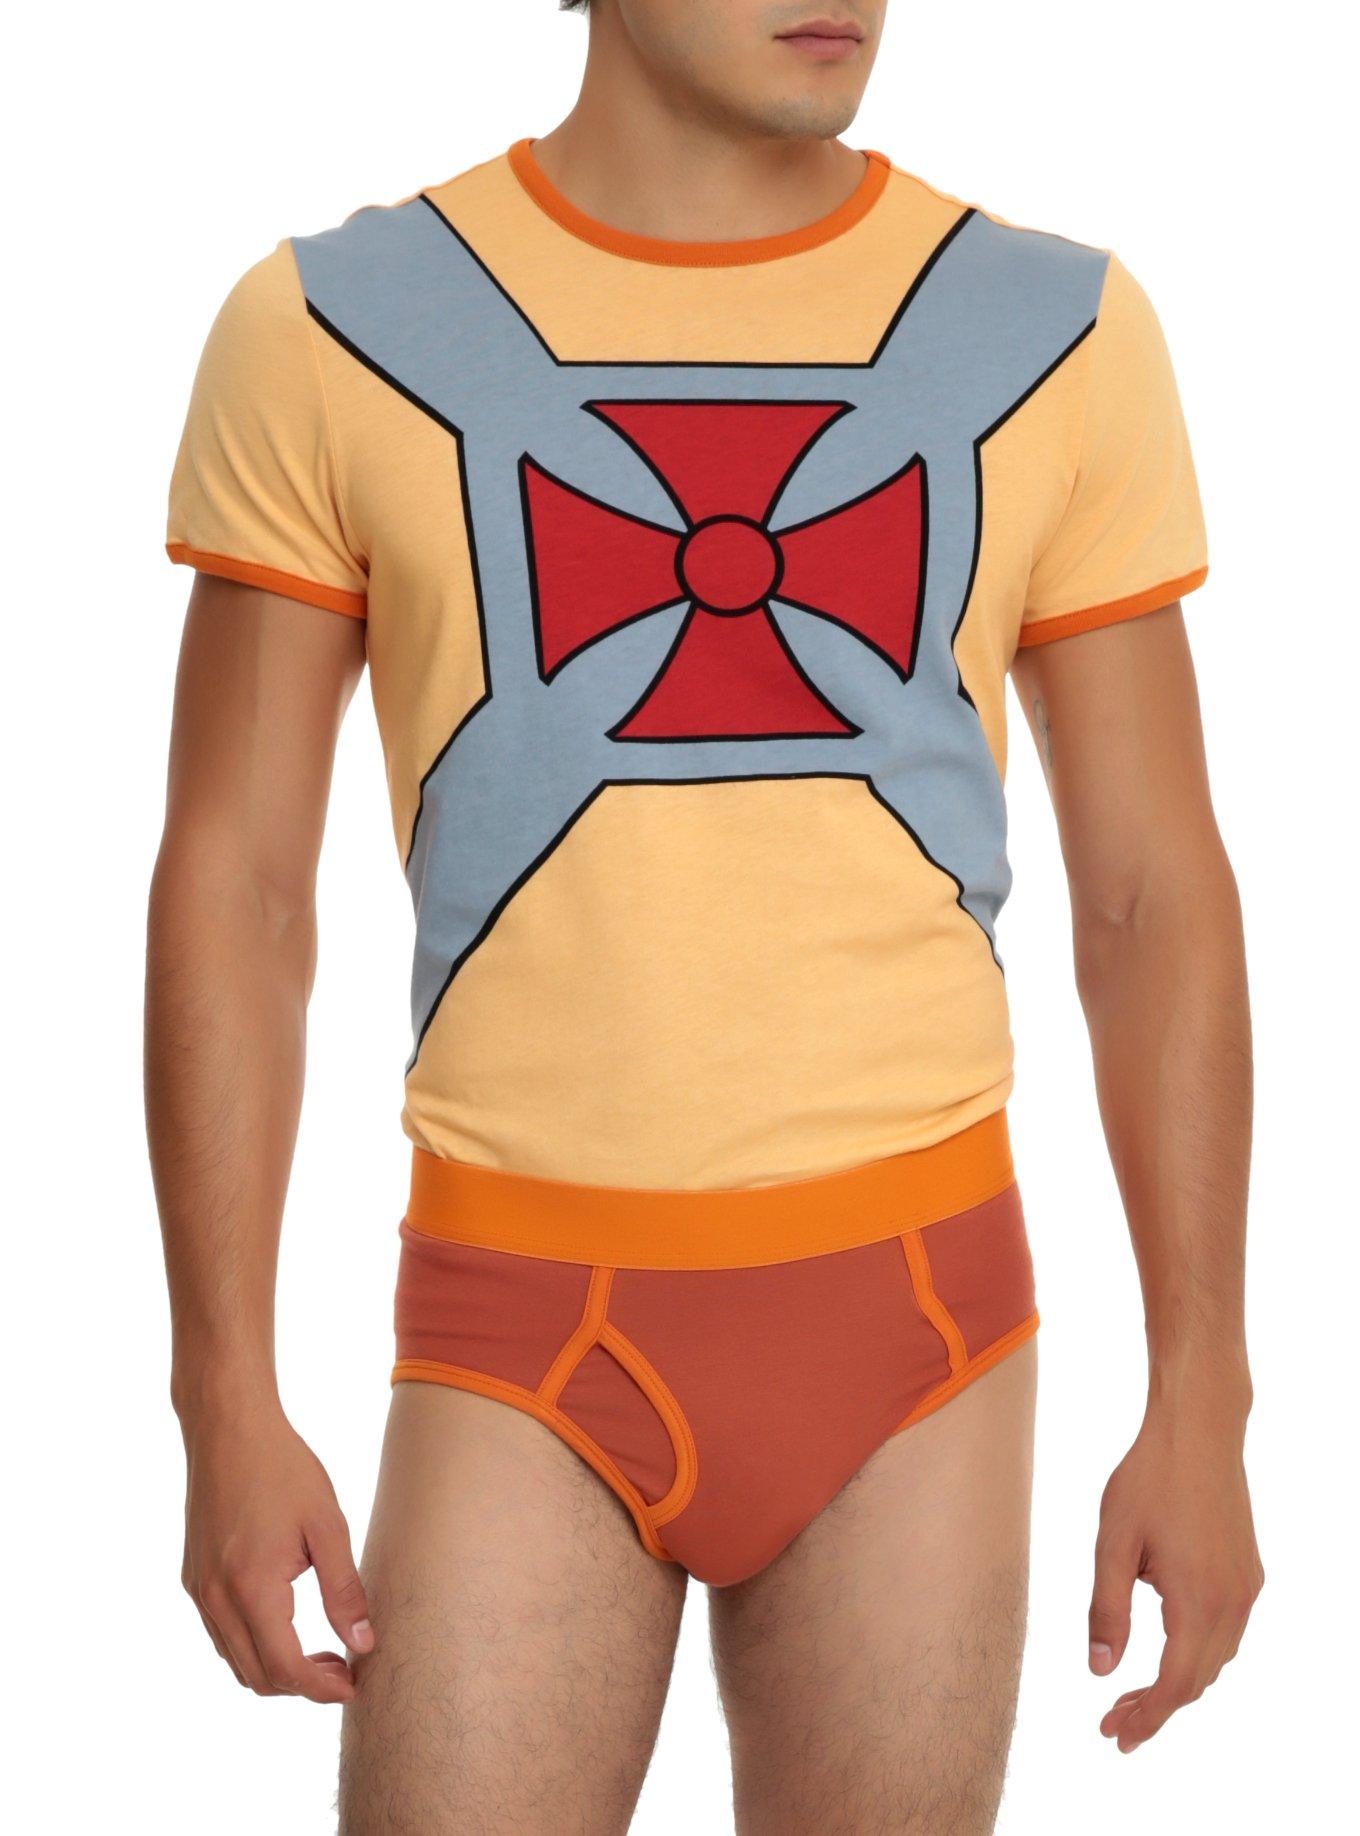 Underoos Boys' Superhero Underwear Shirt Set